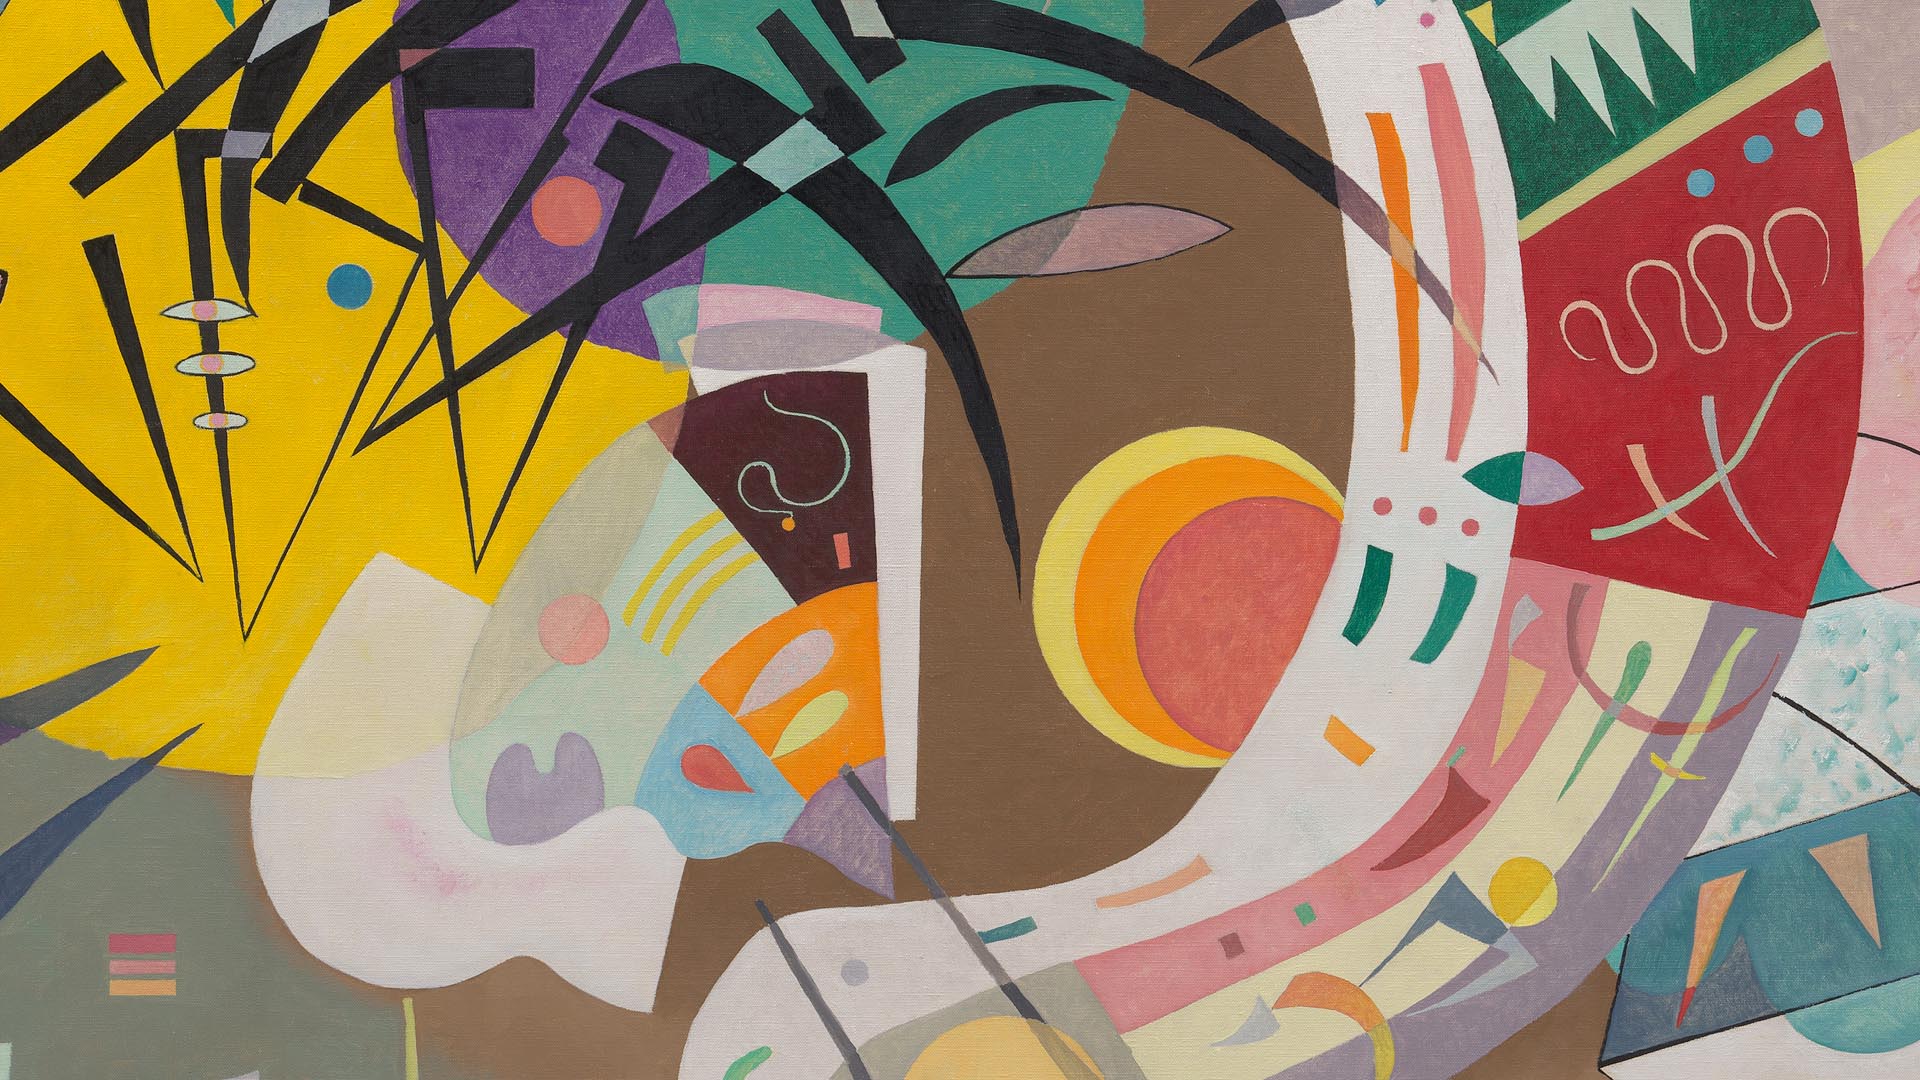 Guggenheim Presents “Vasily Kandinsky: Around the Circle” | The Guggenheim  Museums and Foundation